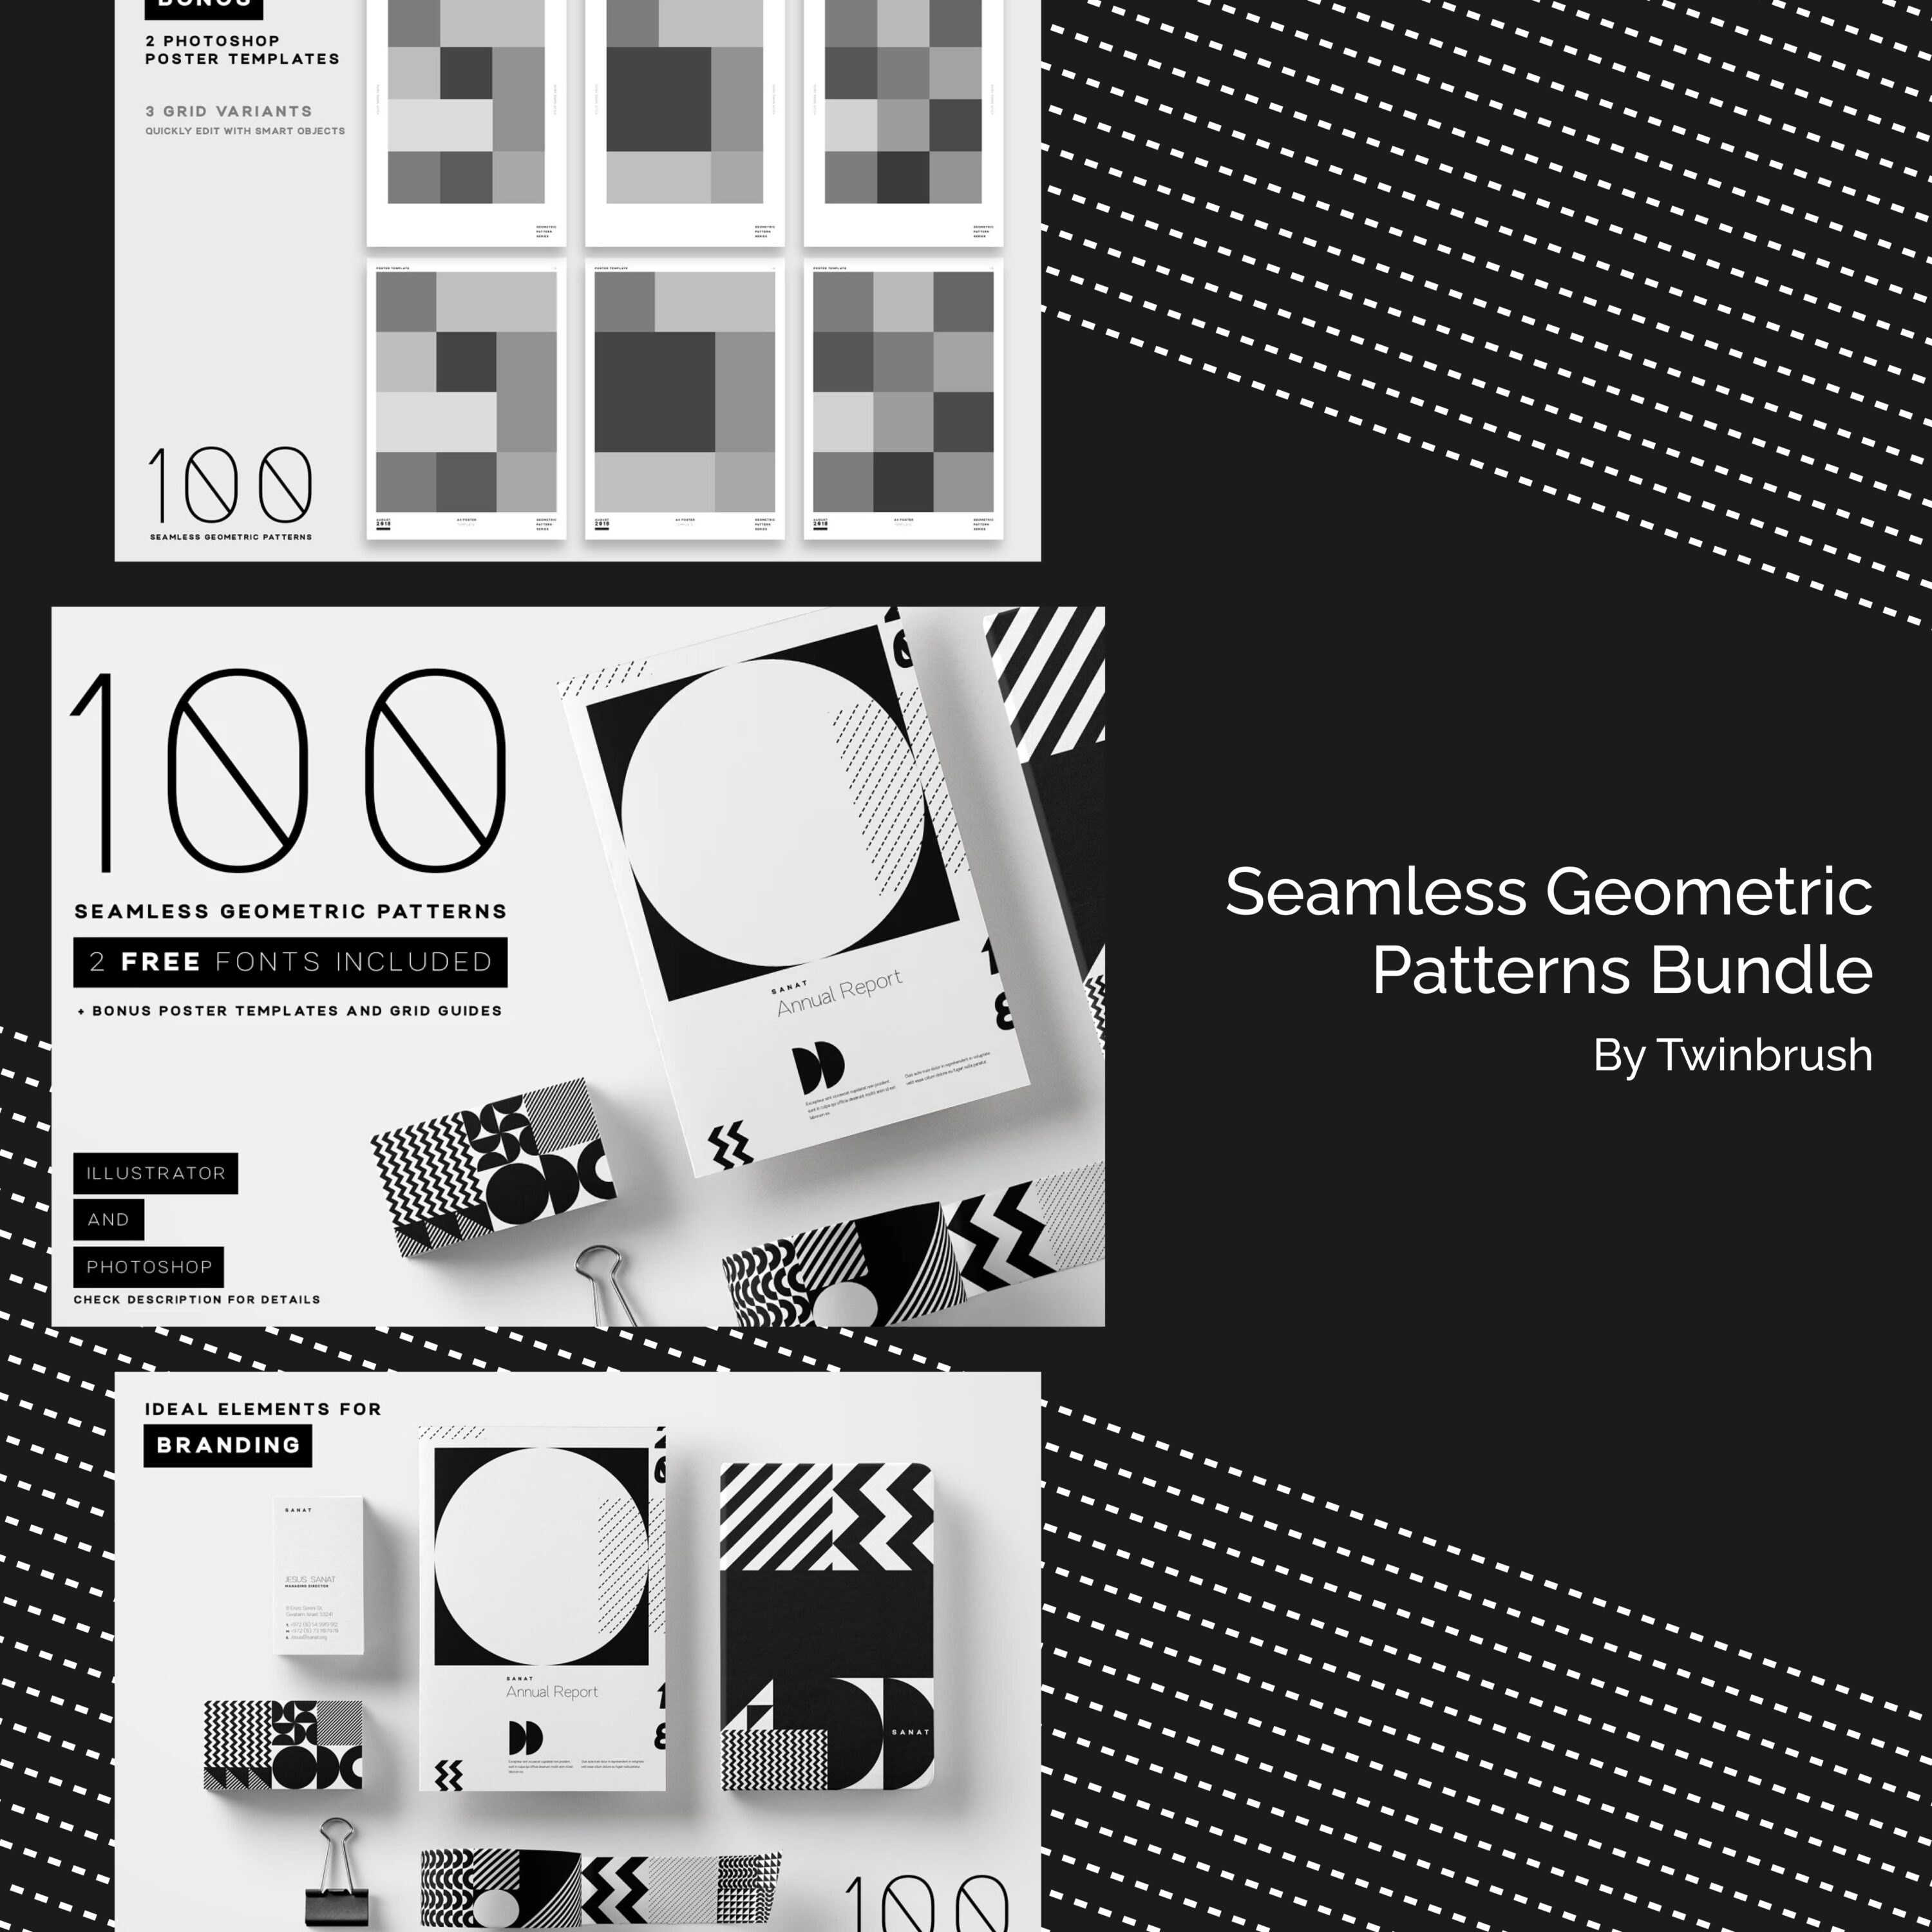 Seamless Geometric Patterns Bundle cover image.